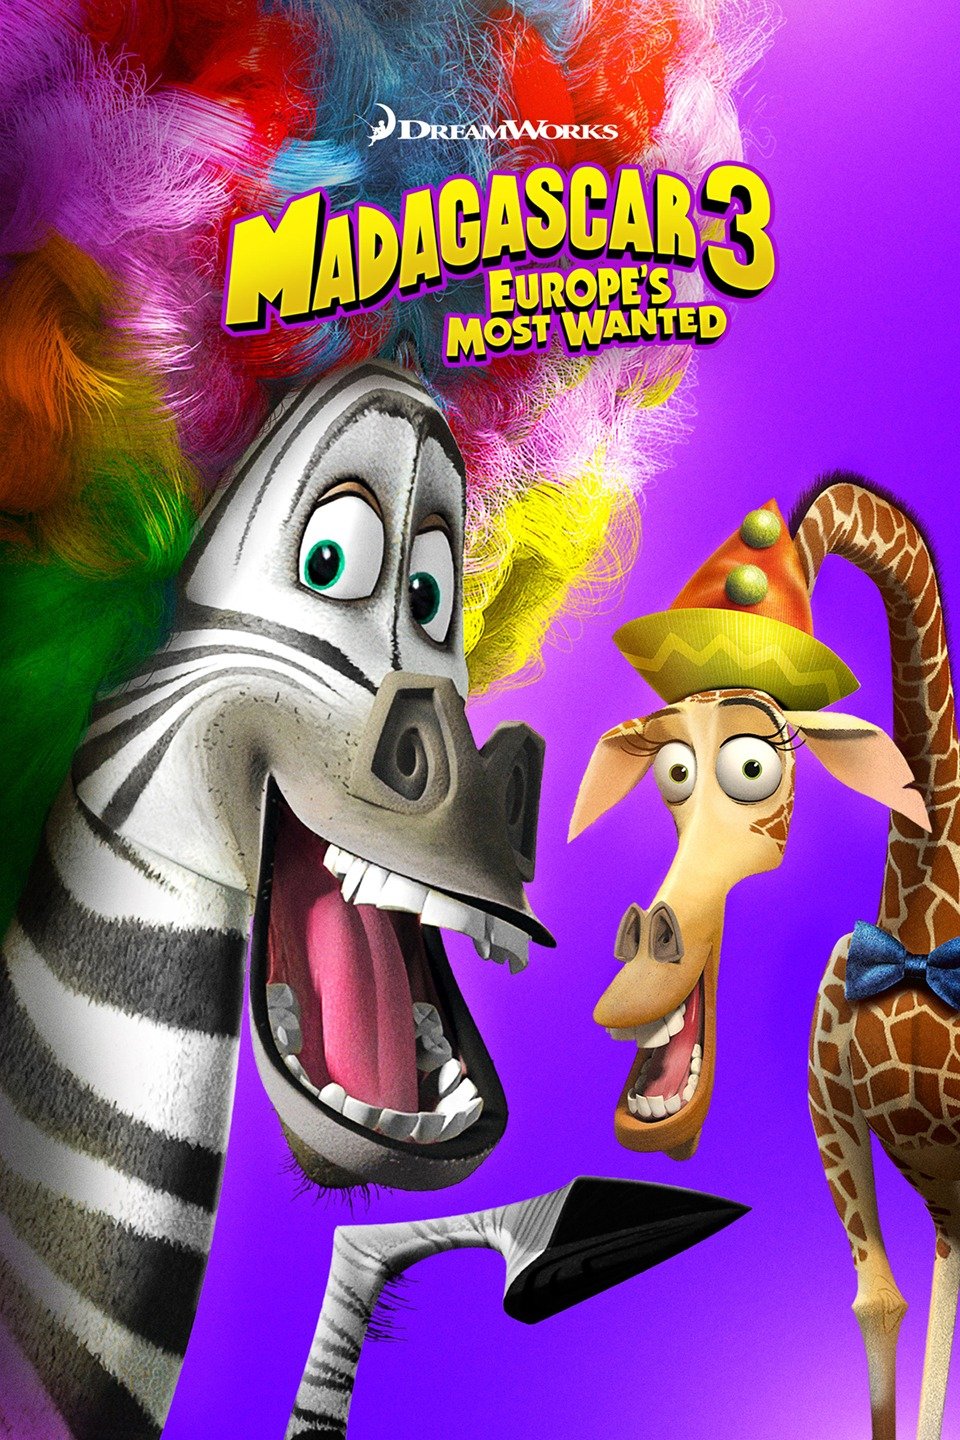 [MINI-HD] Madagascar 3: Europe’s Most Wanted (2012) มาดากัสการ์ 3 ข้ามป่าไปซ่าส์ยุโรป [1080p] [พากย์ไทย 5.1 + อังกฤษ 5.1] [บรรยายไทย + อังกฤษ] [เสียงไทย + ซับไทย] [ONE2UP]